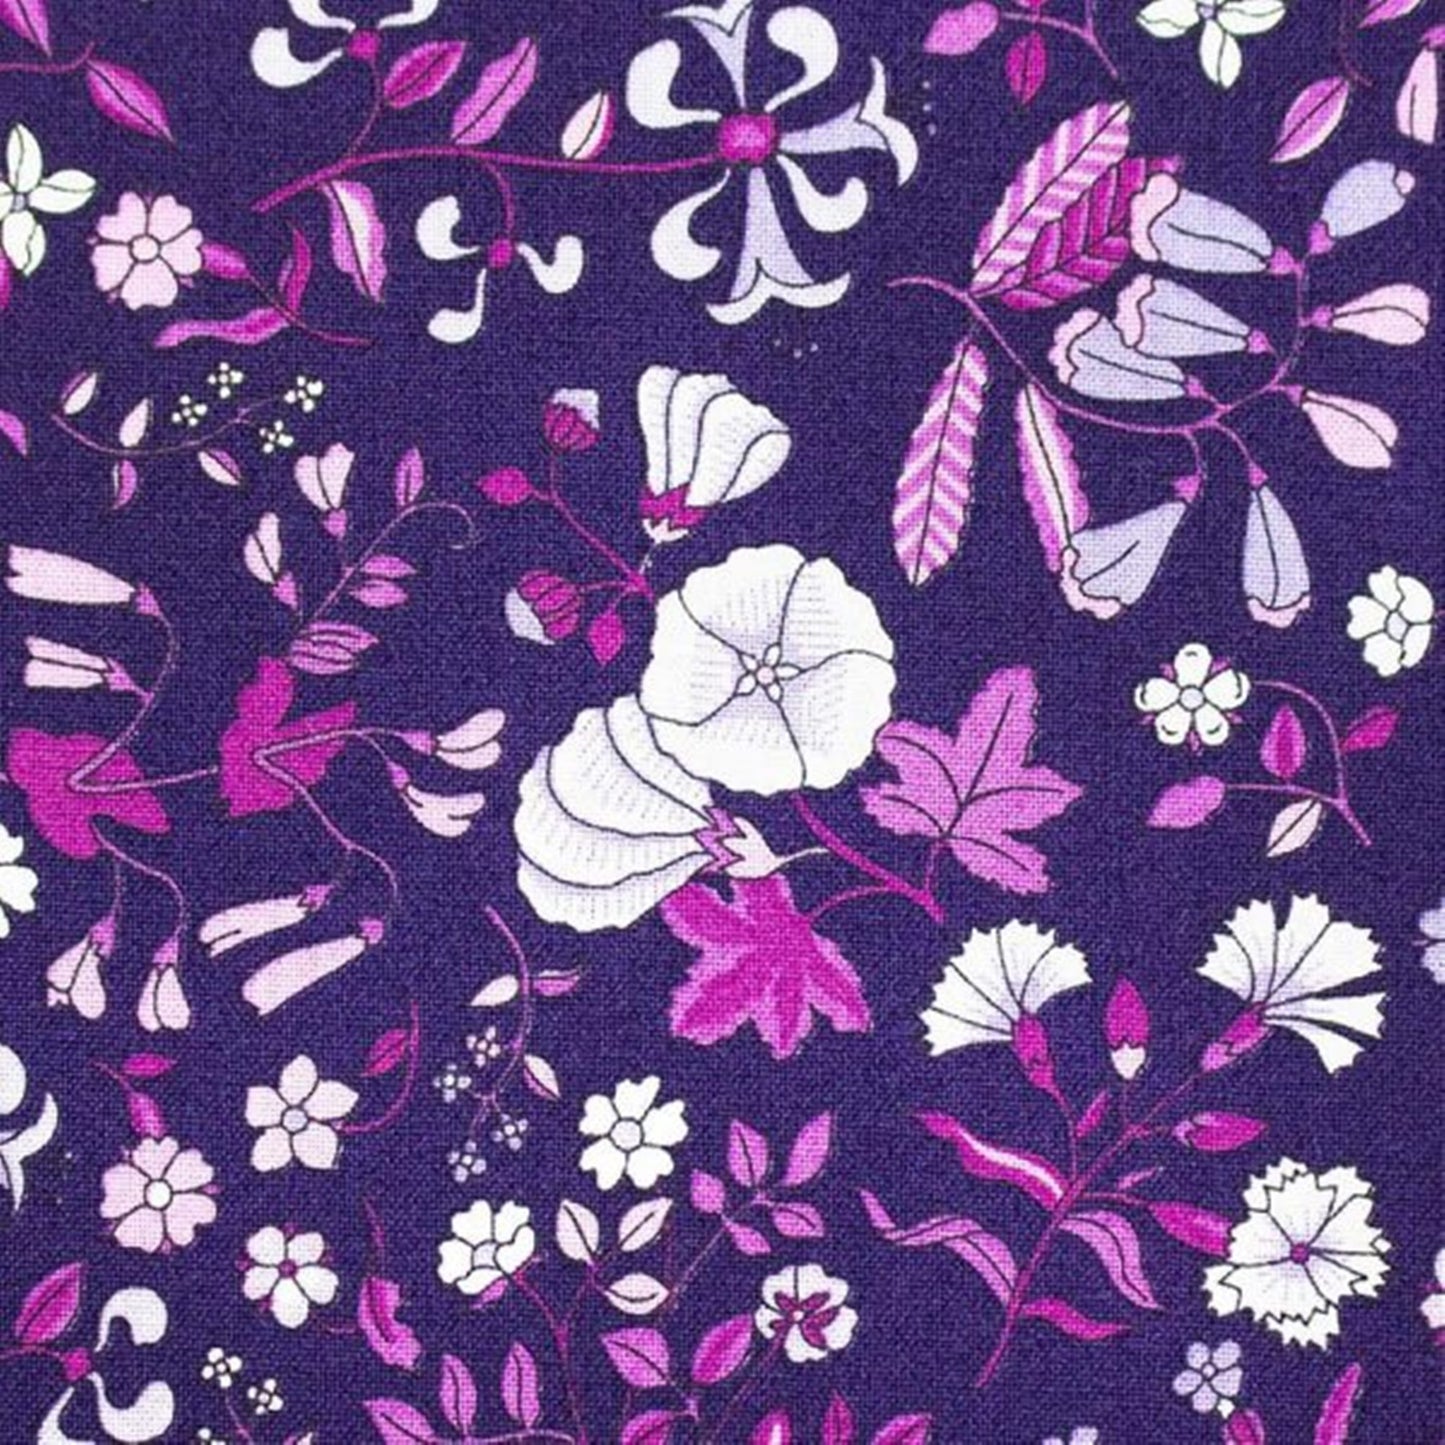 Liberty Flower Show Botanical Jewel Wildflower Field cotton quilt fabric